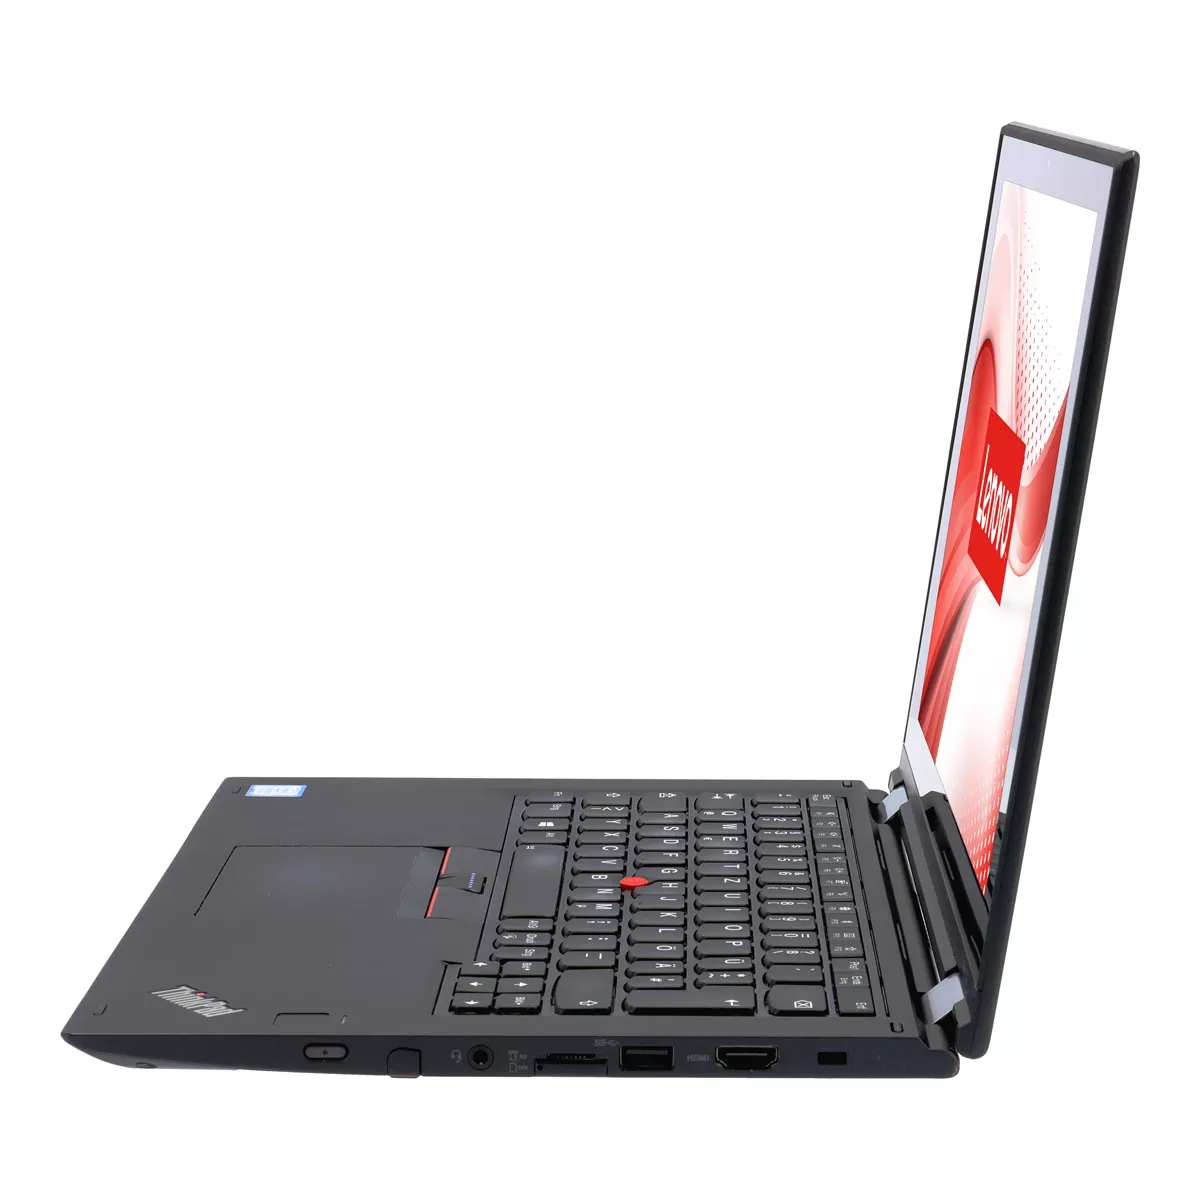 Lenovo ThinkPad X380 Yoga Core i7 8550U 16 GB DDR4 500 GB M.2 SSD Webcam Touch B